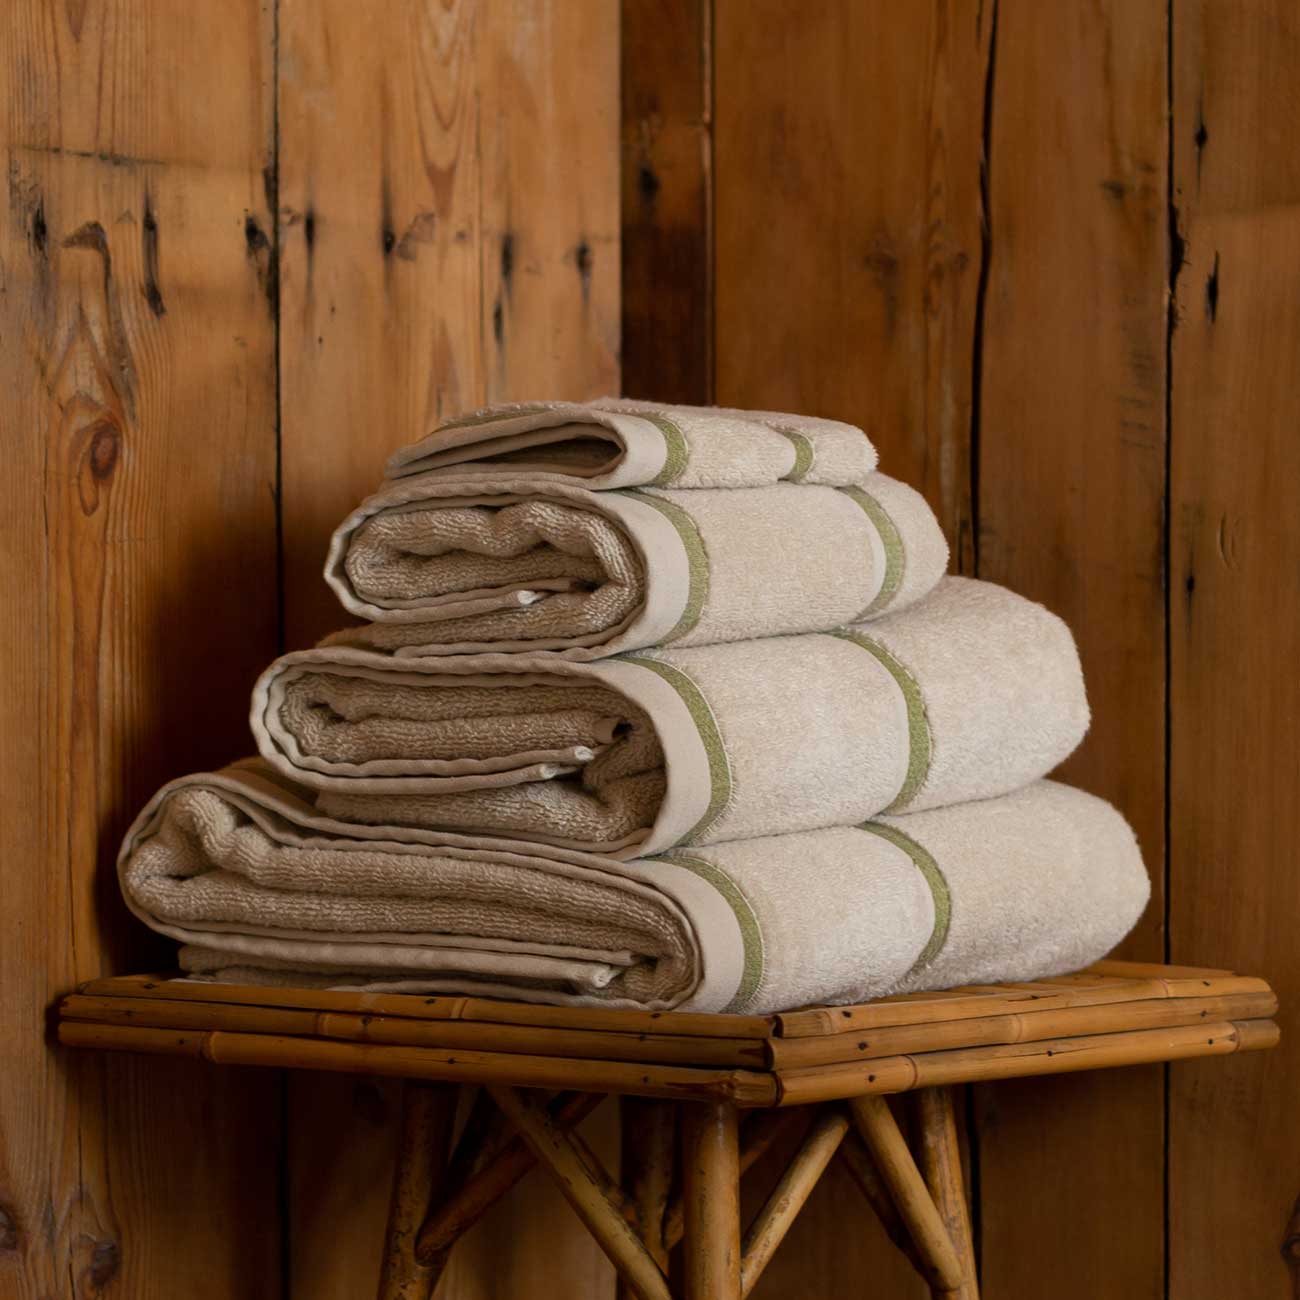 Birch Cotton Towels